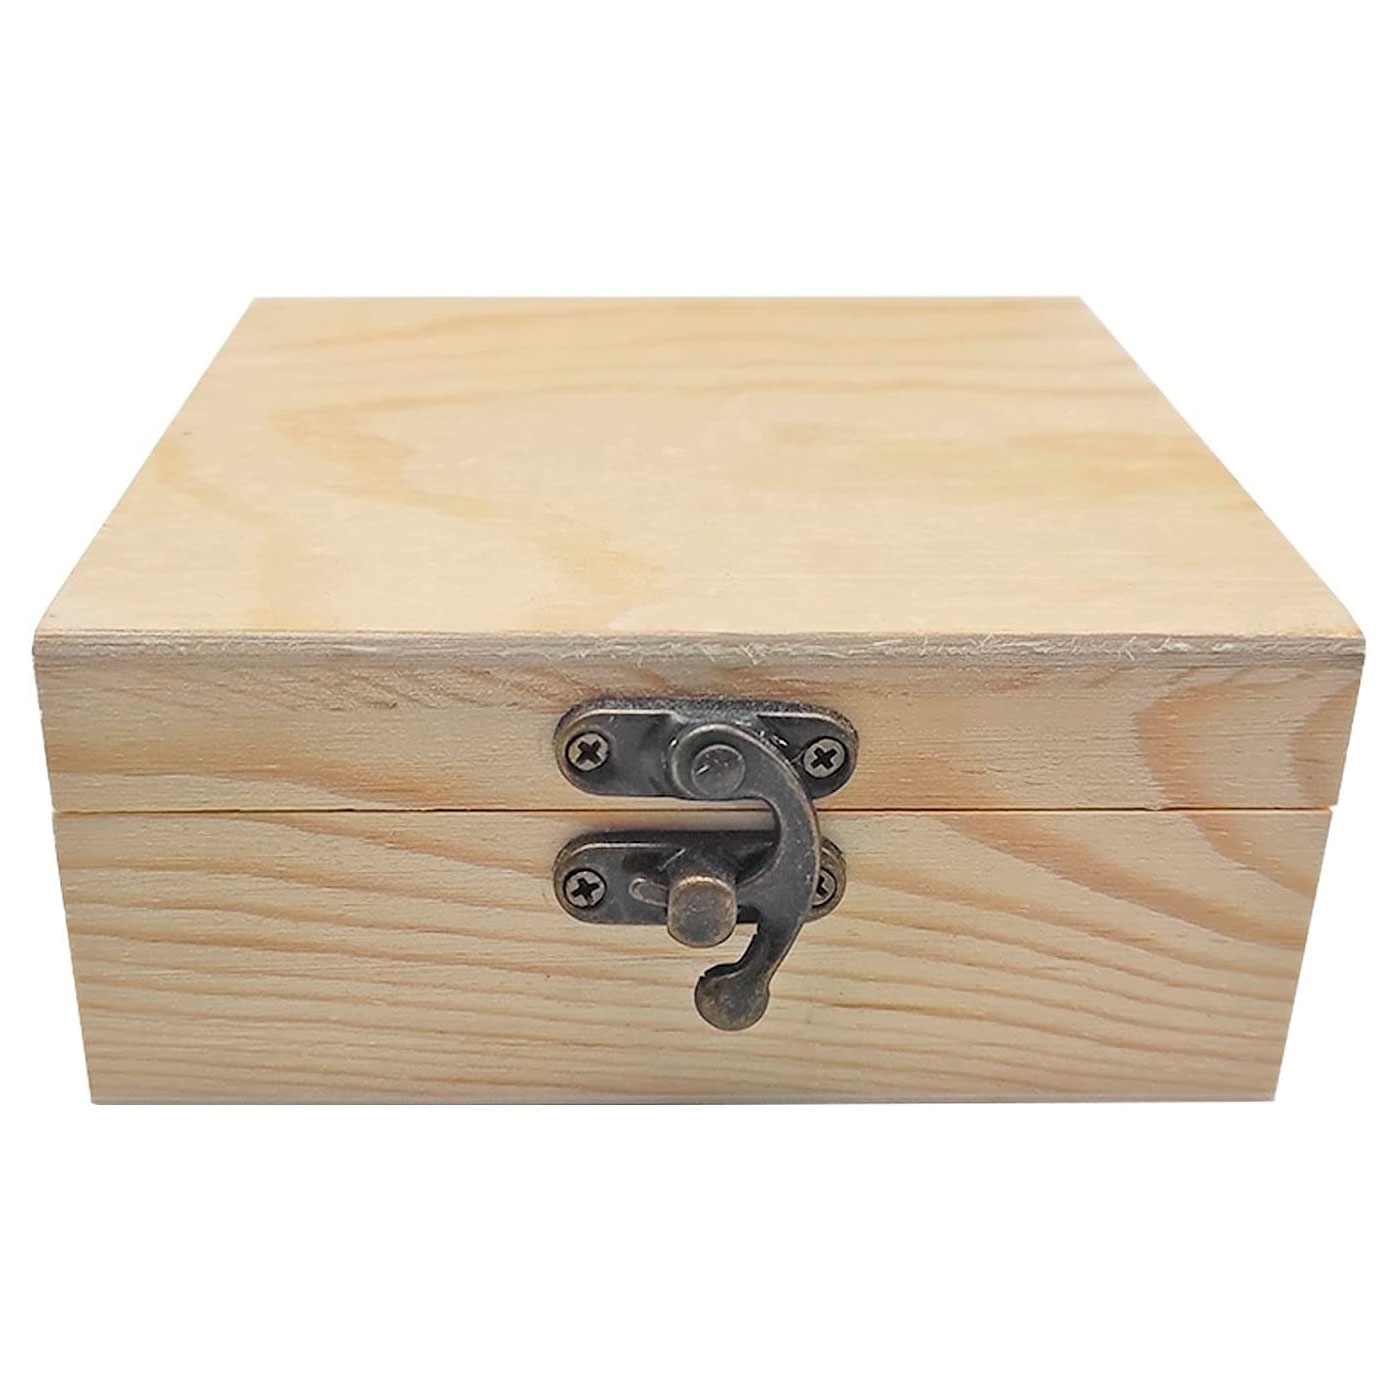 Tradineur - Caja de madera con 9 compartimentos y tapa con cristal,  expositor de joyas, organizador, joyero, collares, relojes